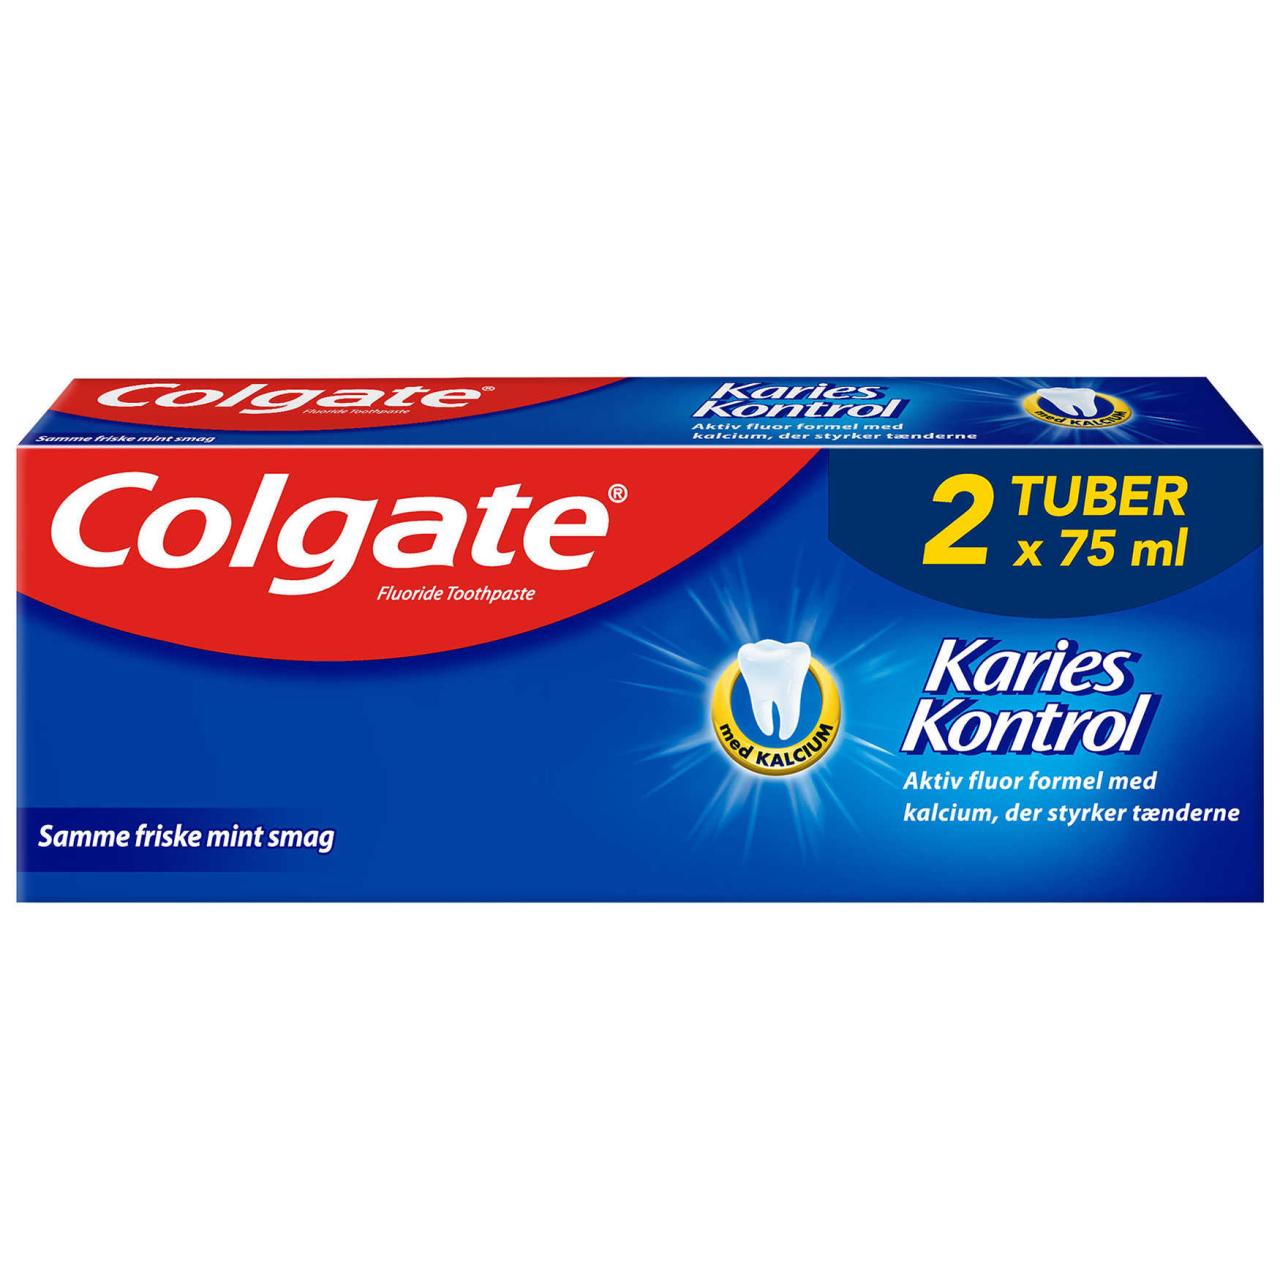 Colgate Karies Kontrol 2x75 ml